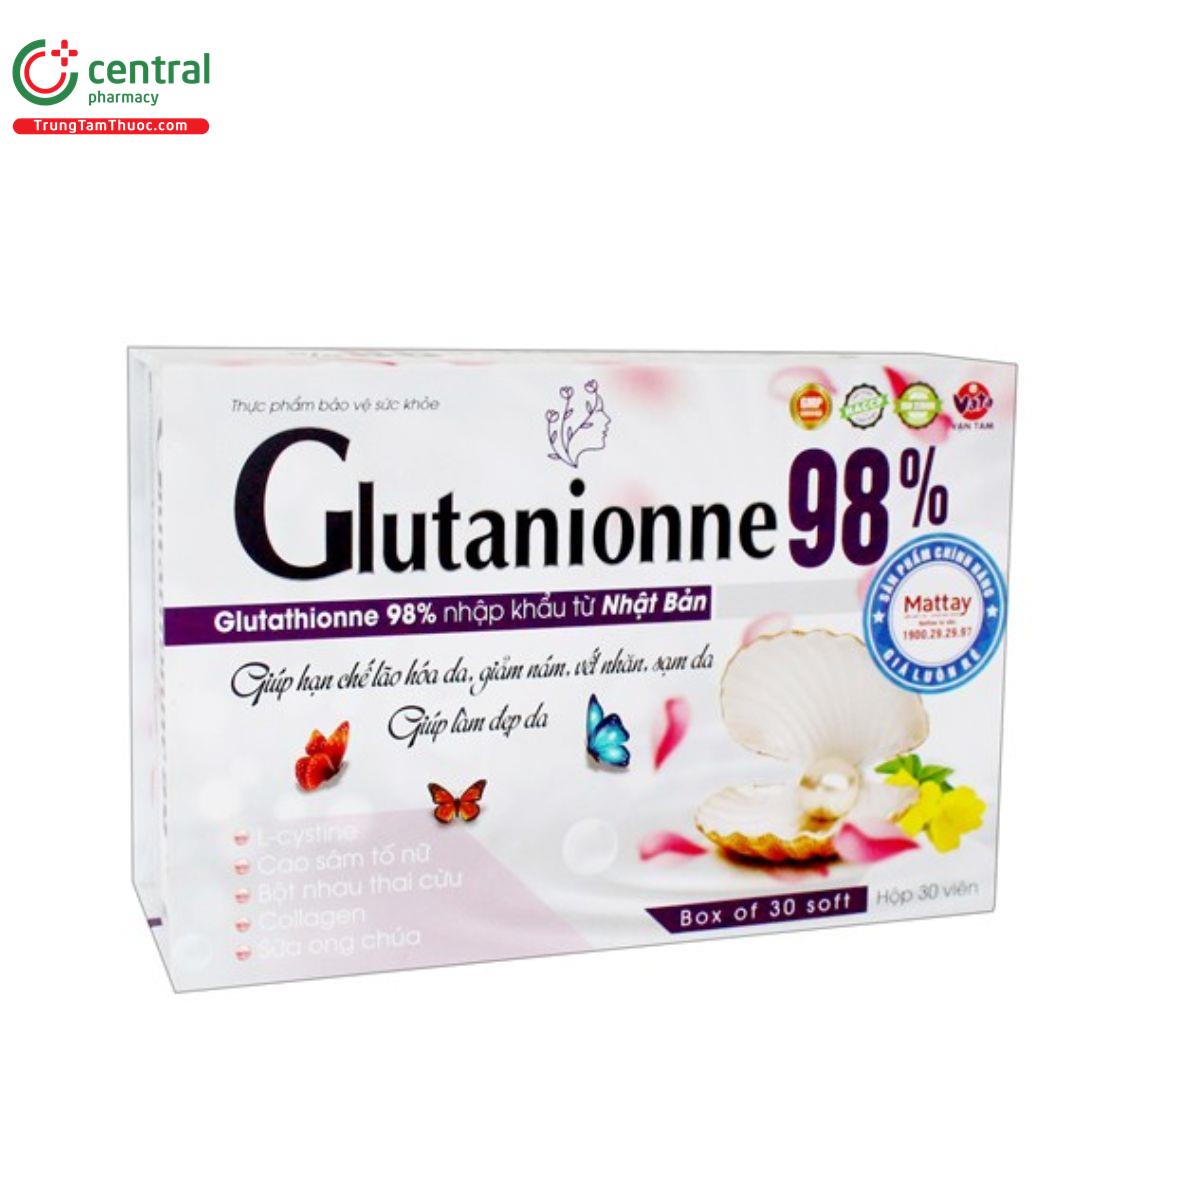 glutanionne 98 7 M5634